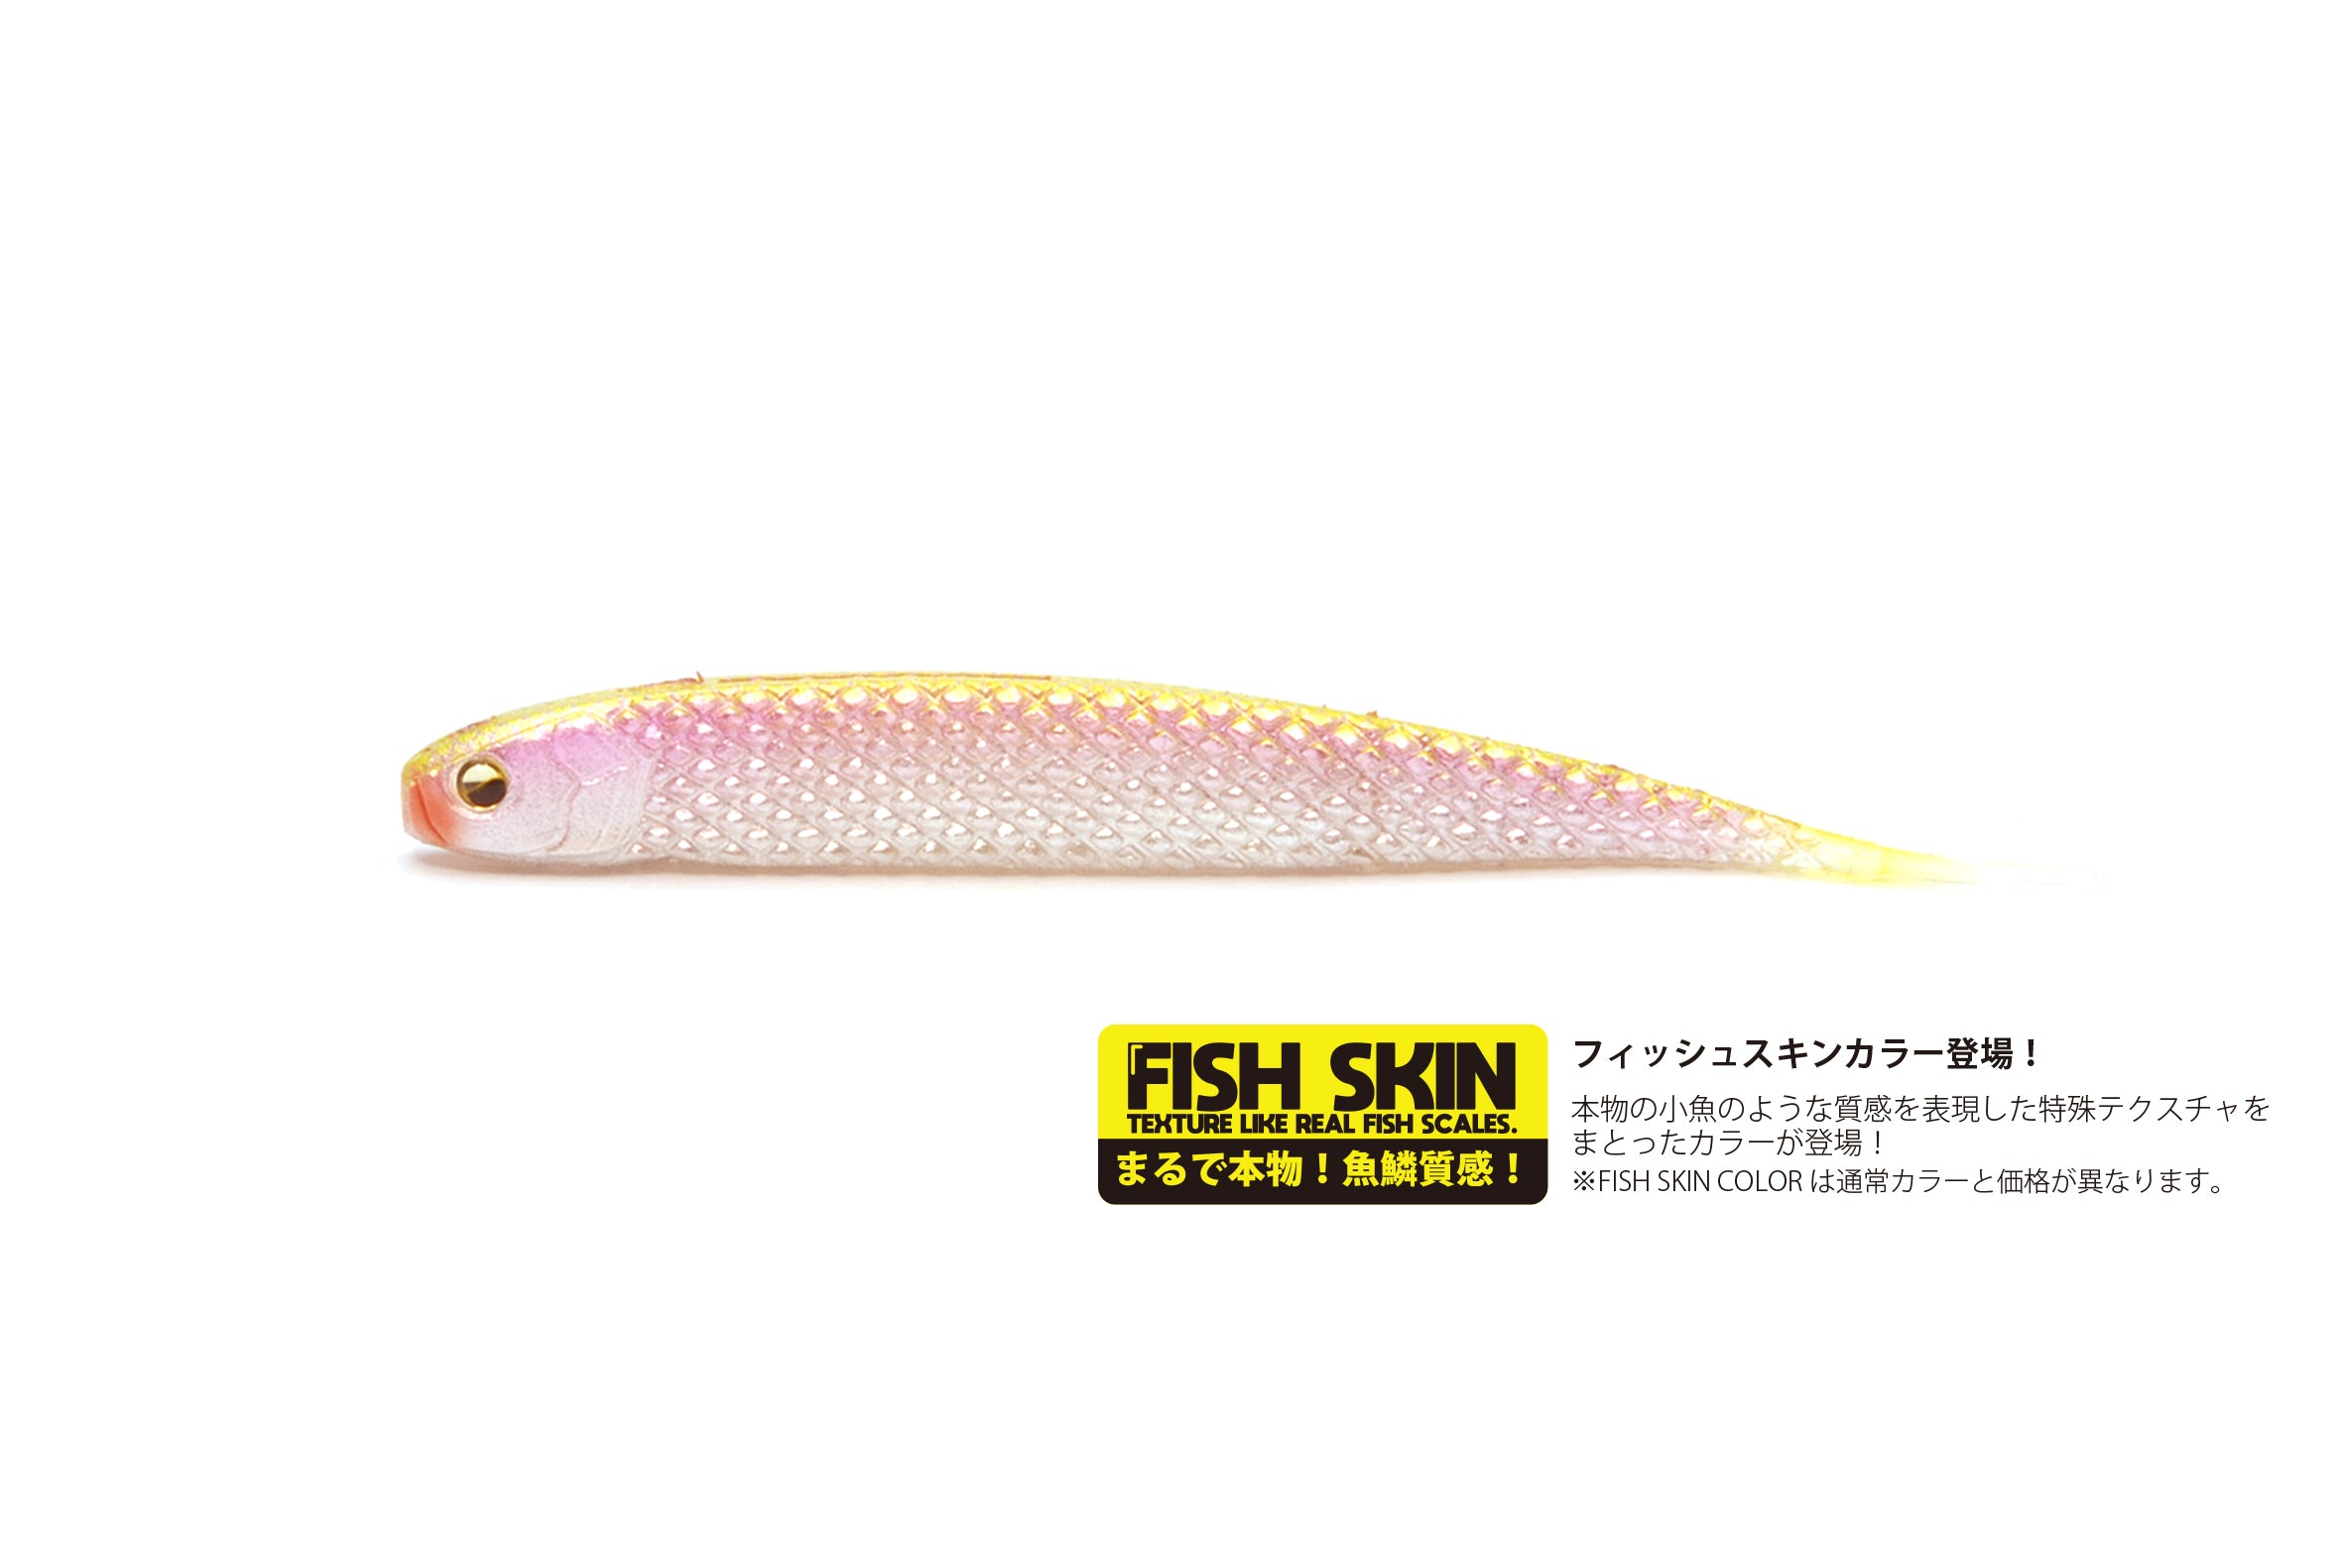 Pre-order] Raid Japan G Dash - 【Bass Trout Salt lure fishing web order  shop】BackLash｜Japanese fishing tackle｜